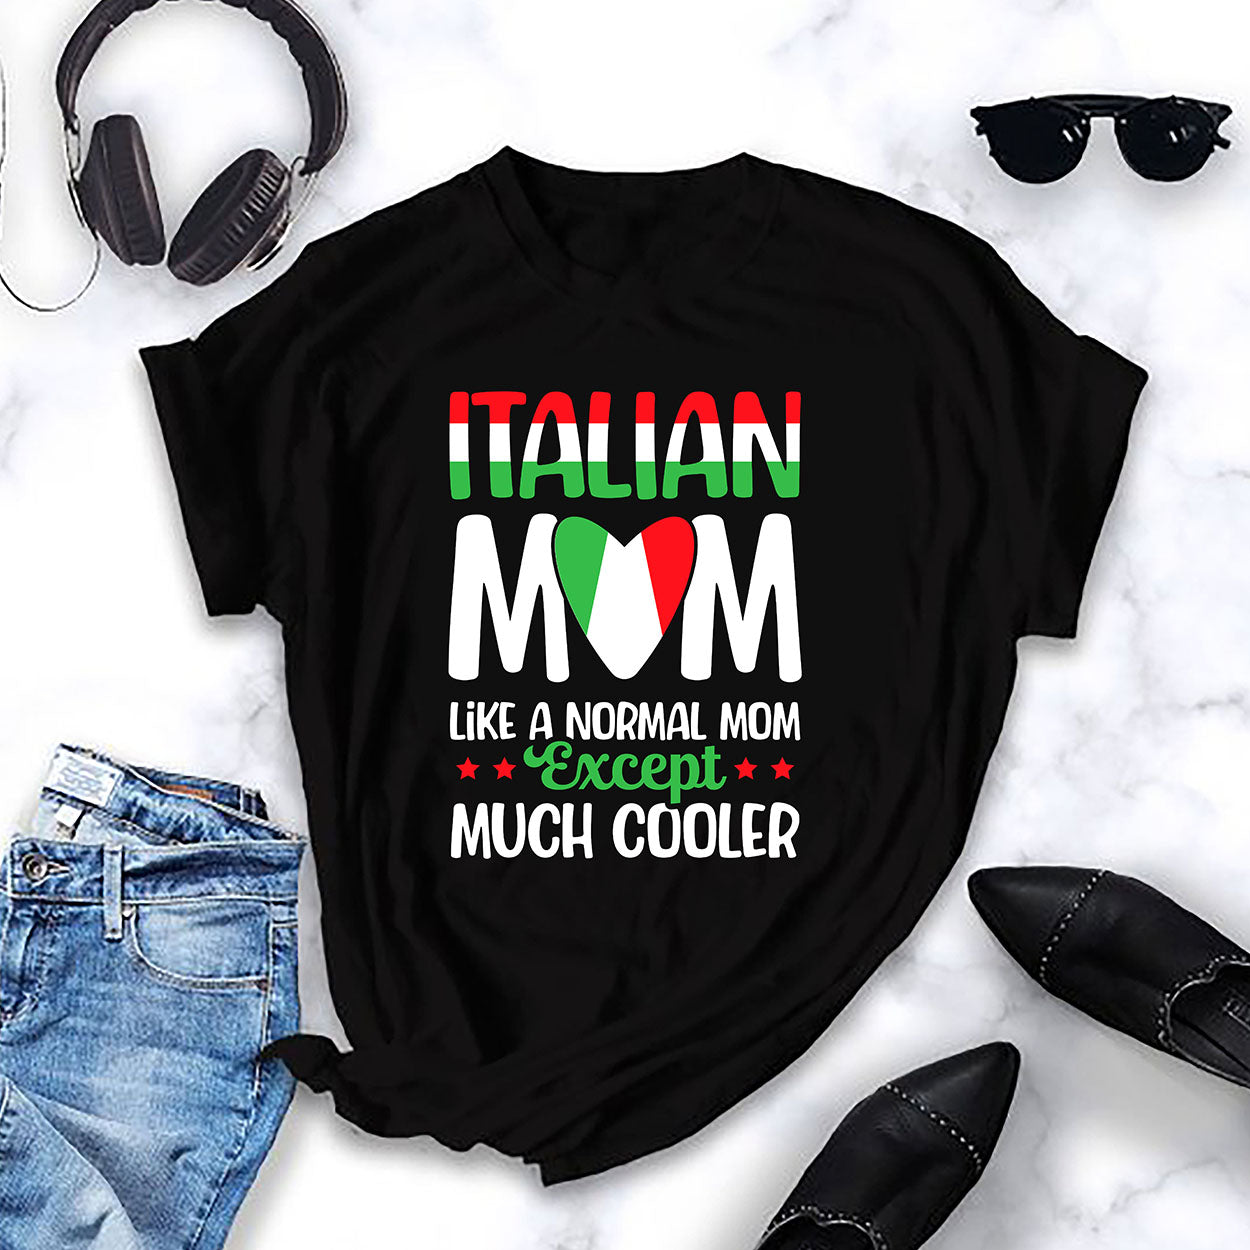 Italian Moms Are Cooler Womens Tee